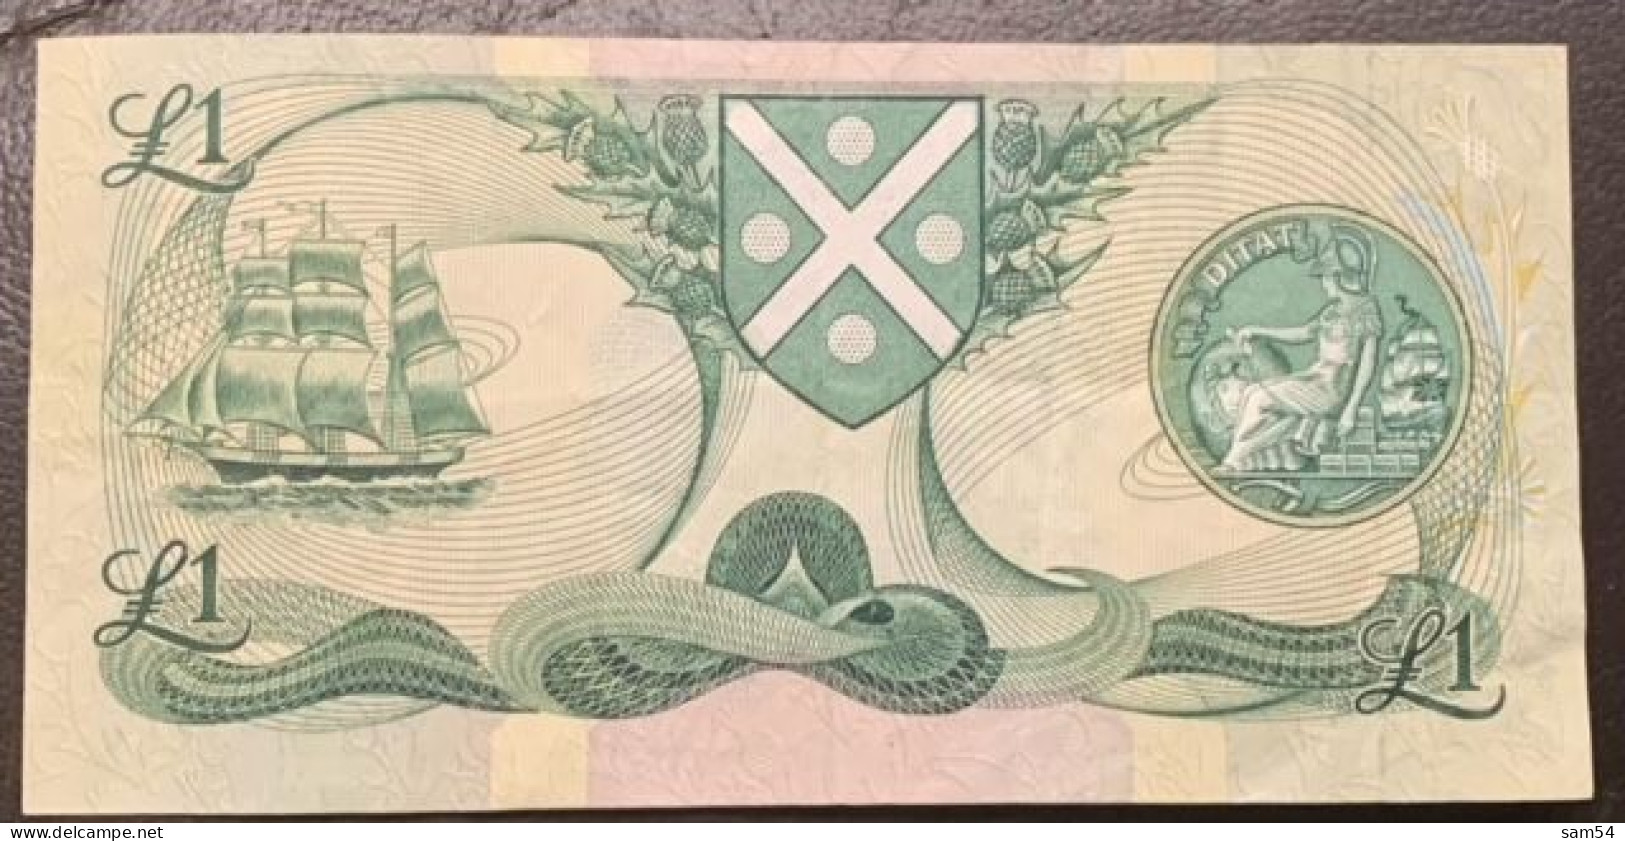 Ecosse Billet ONE Pound Bank Of Scotland - 1 Pound